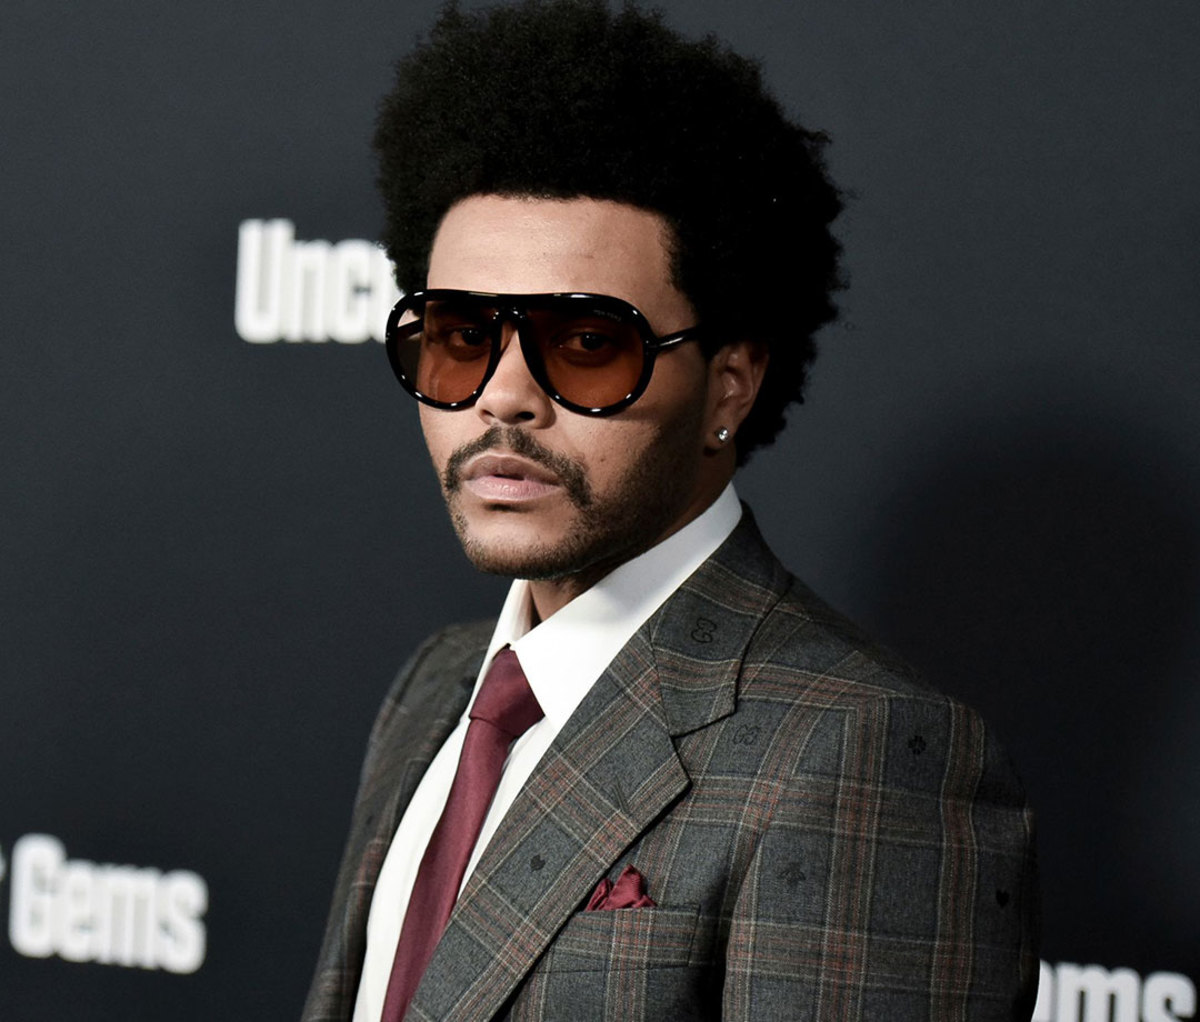  The Weeknd attends the LA premiere of "Uncut Gems" in Los Angeles